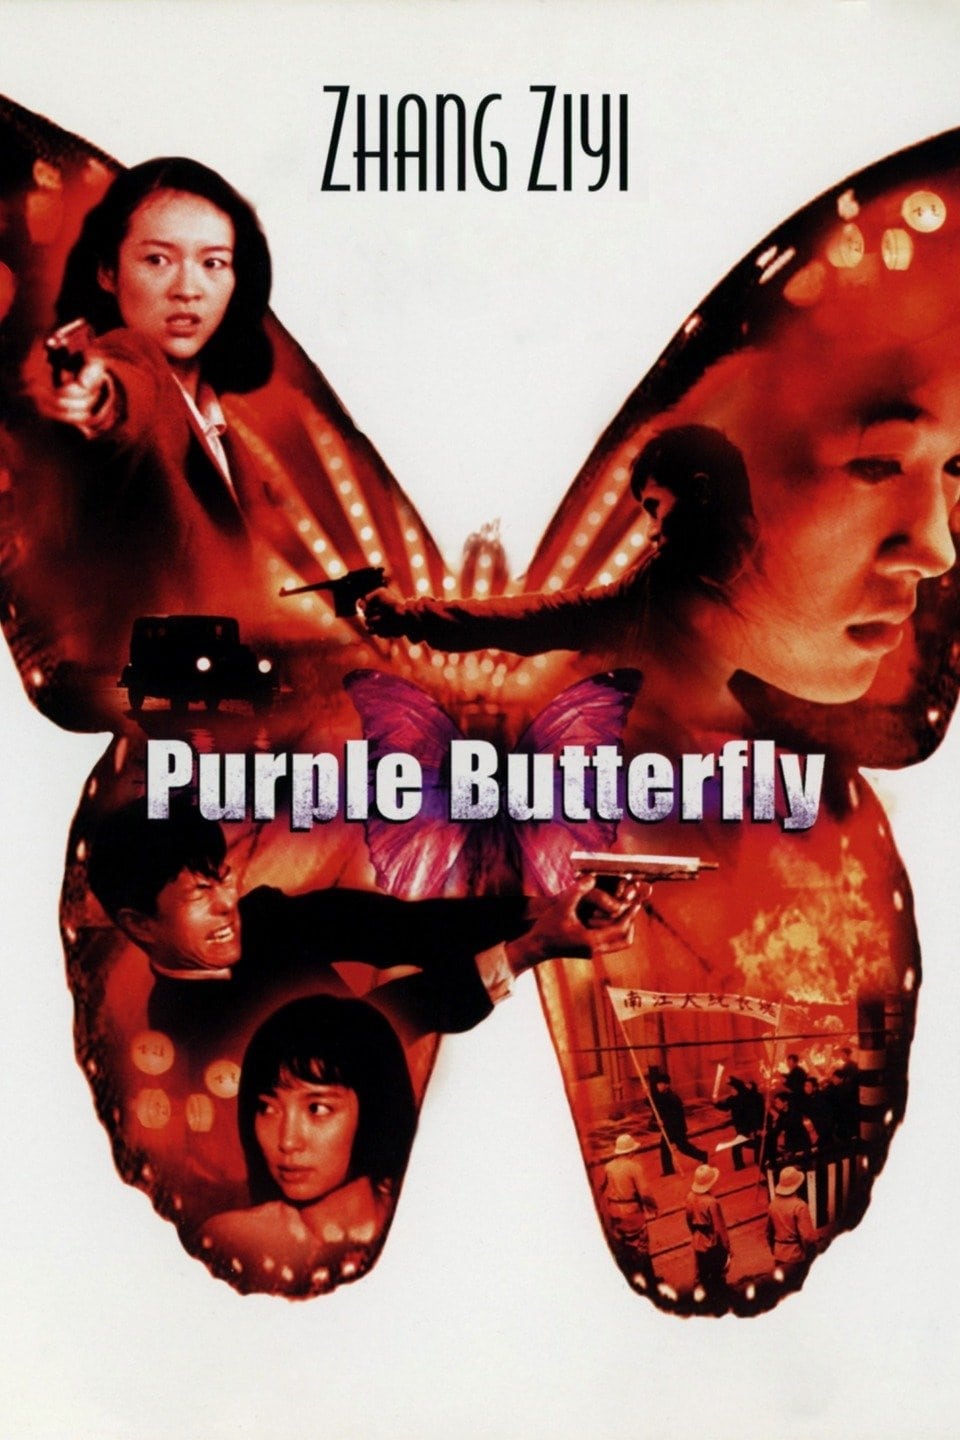 Purple Butterfly (2003) - Where to watch the movie online - Plex